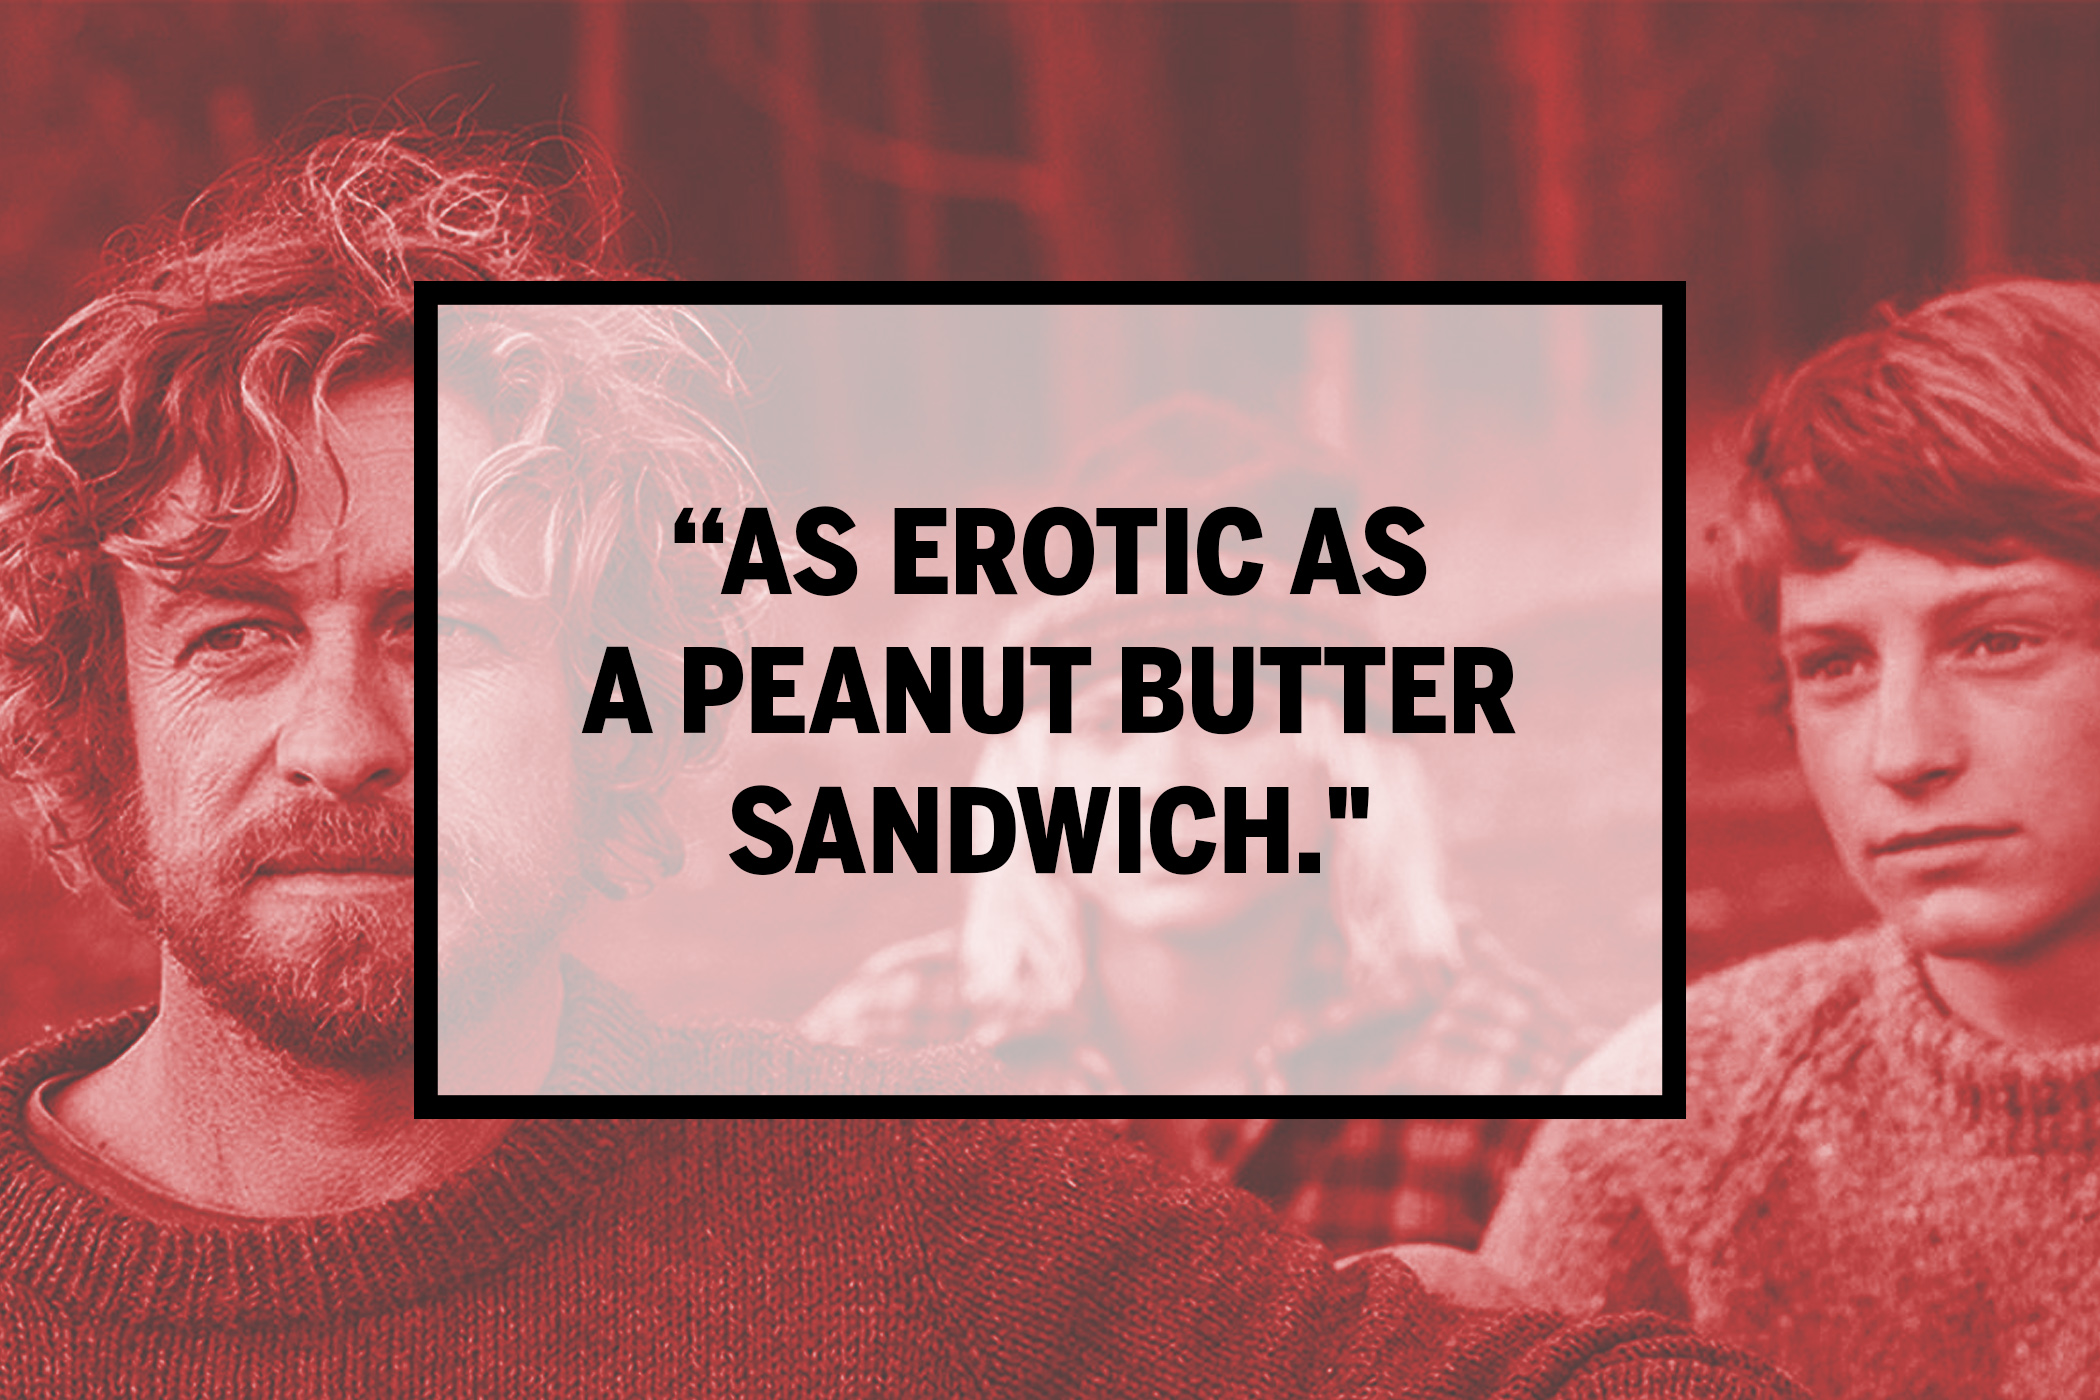 As erotic as a peanut butter sandwich